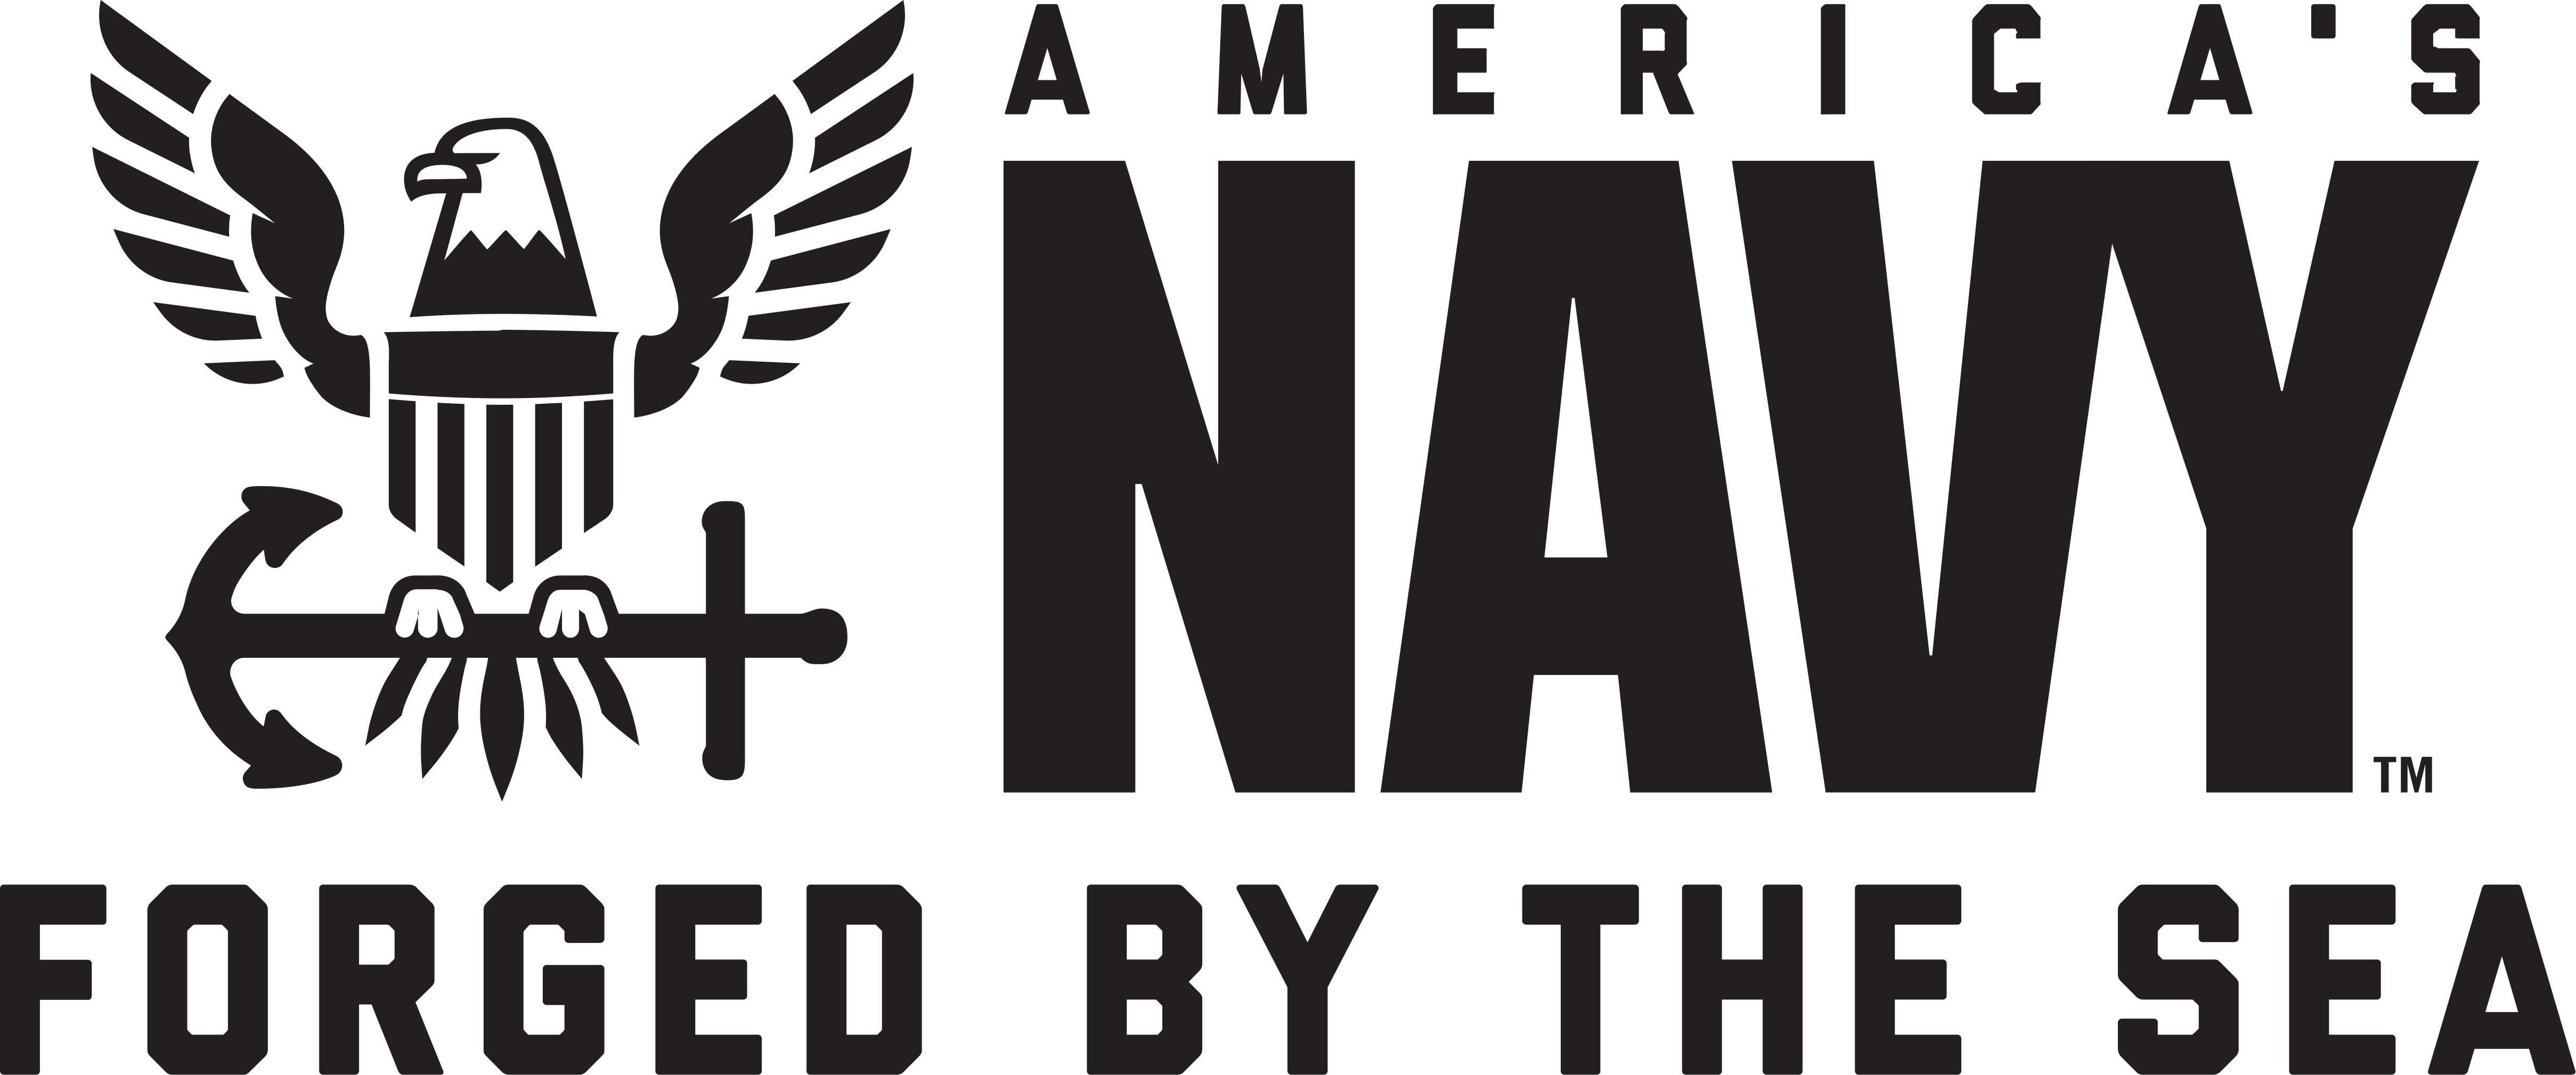 https://upload.wikimedia.org/wikipedia/commons/8/83/United_States_Navy_logo.jpg